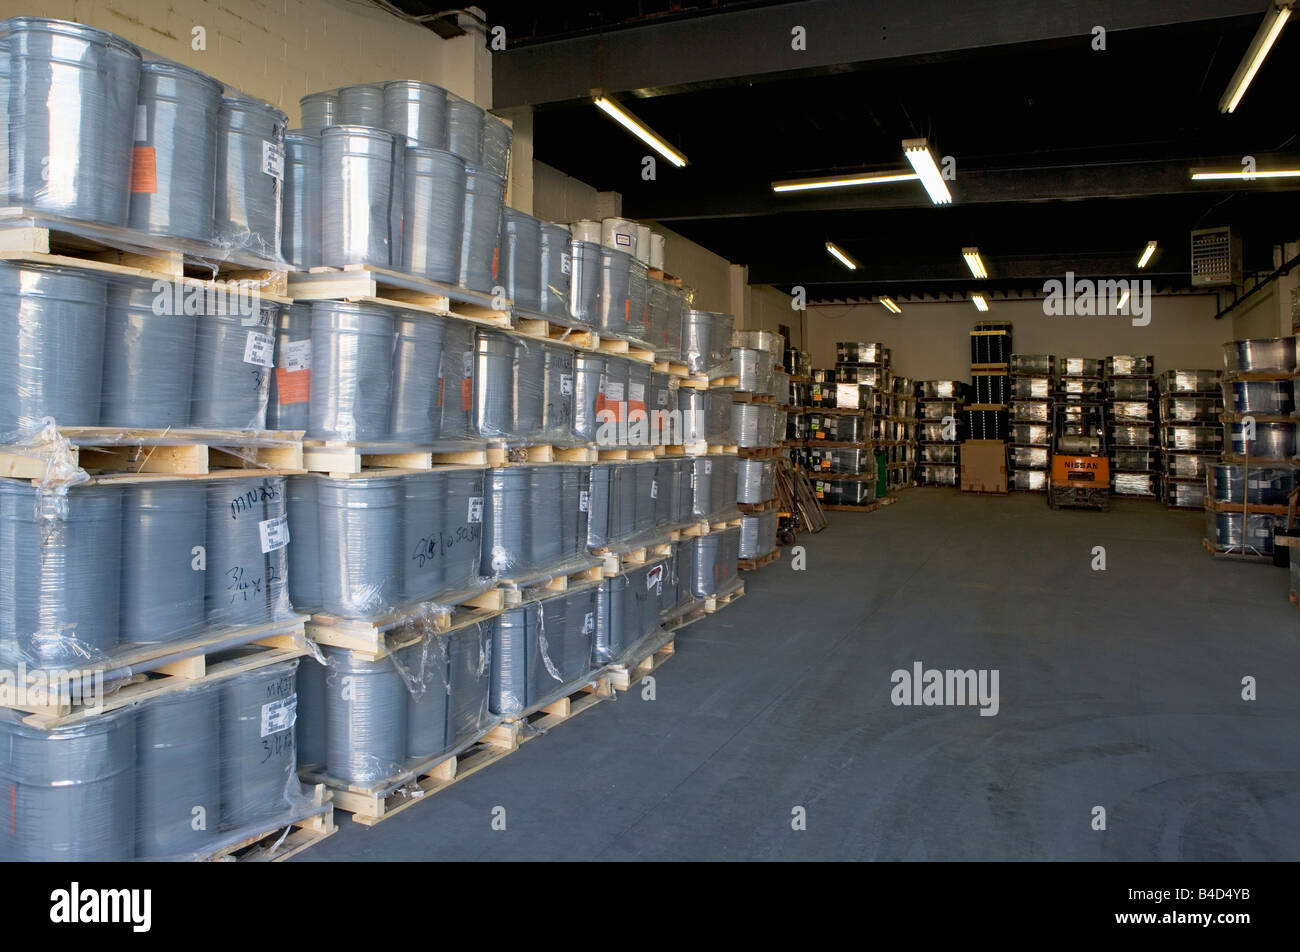 Warehouse, abundance, aisle, blue collar, commerce, factory, fork lift, inventory, metal, steel, merchandise, occupation, order, Stock Photo